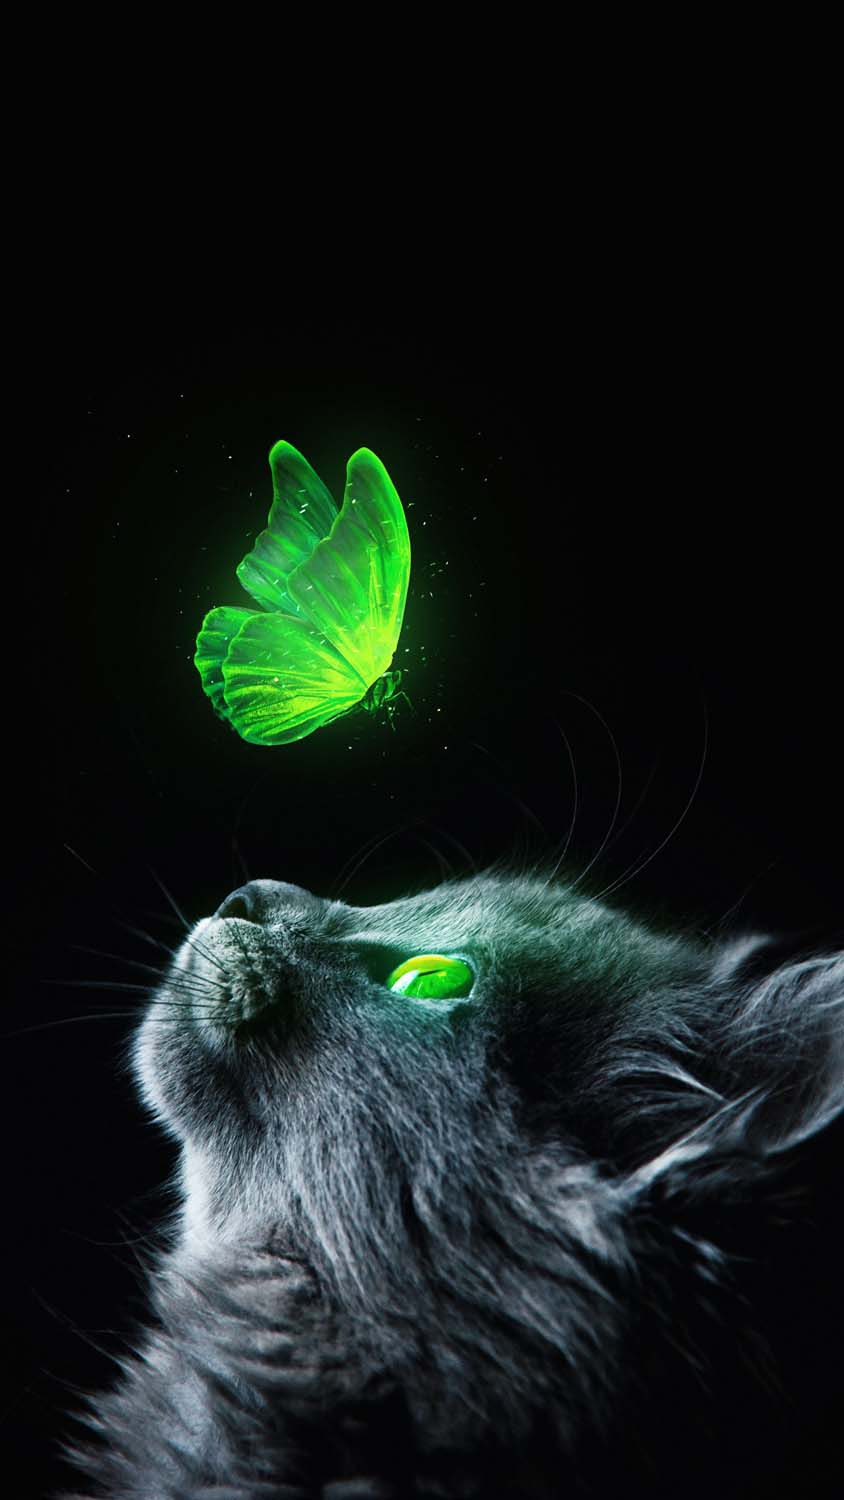 Green Cat IPhone Wallpaper HD - IPhone Wallpapers : iPhone Wallpapers